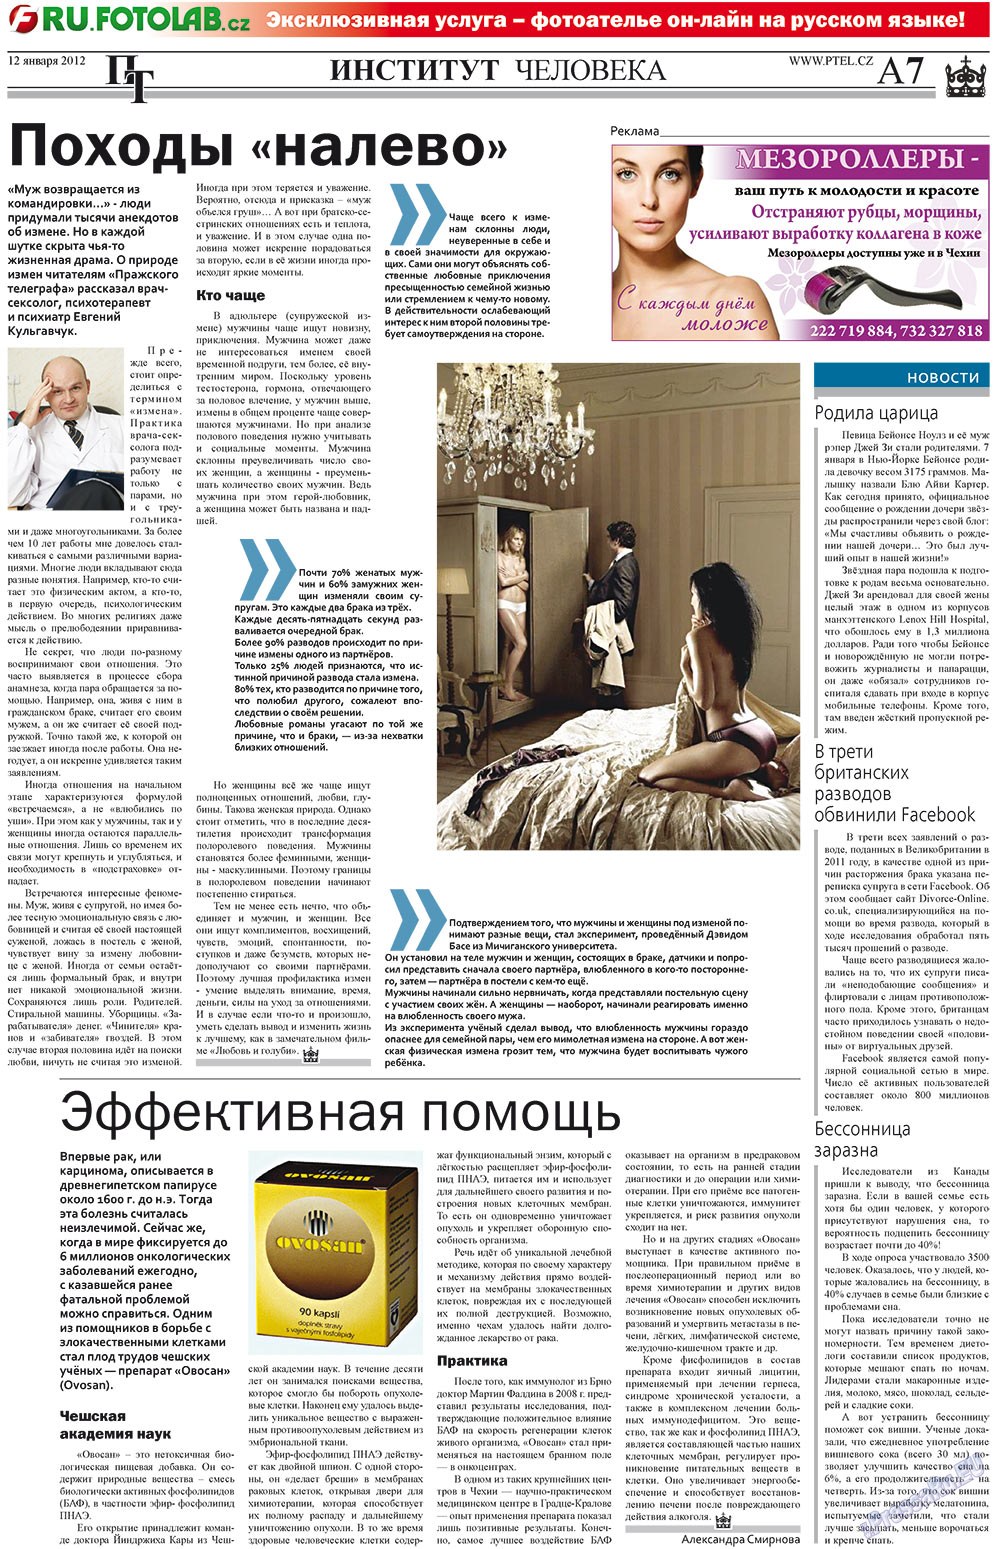 Пражский телеграф, газета. 2012 №2 стр.7